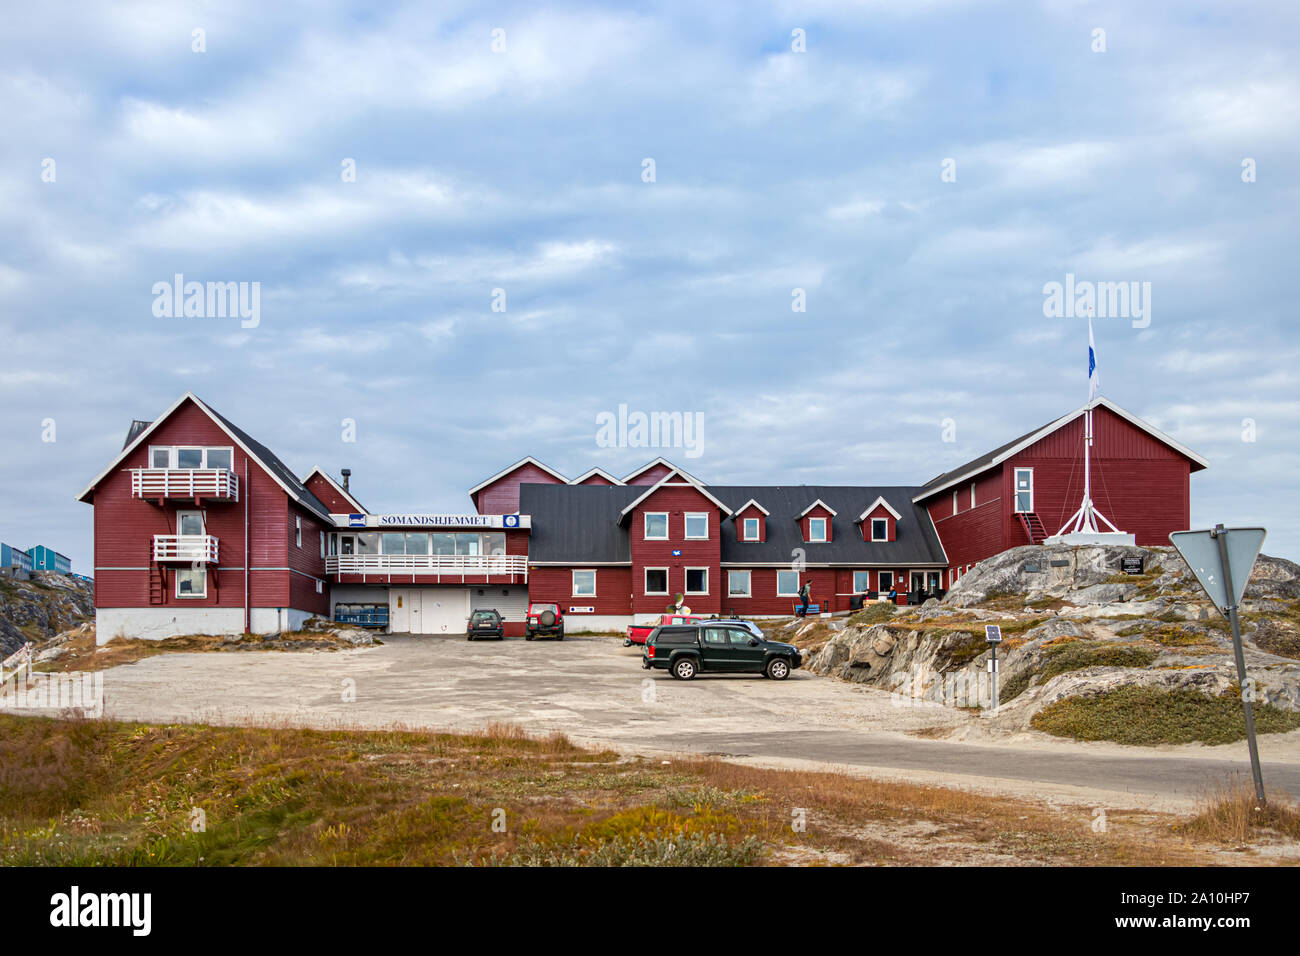 The Somandshjemmet Hotel - Seaman Home in Nuuk, Greenland. Stock Photo